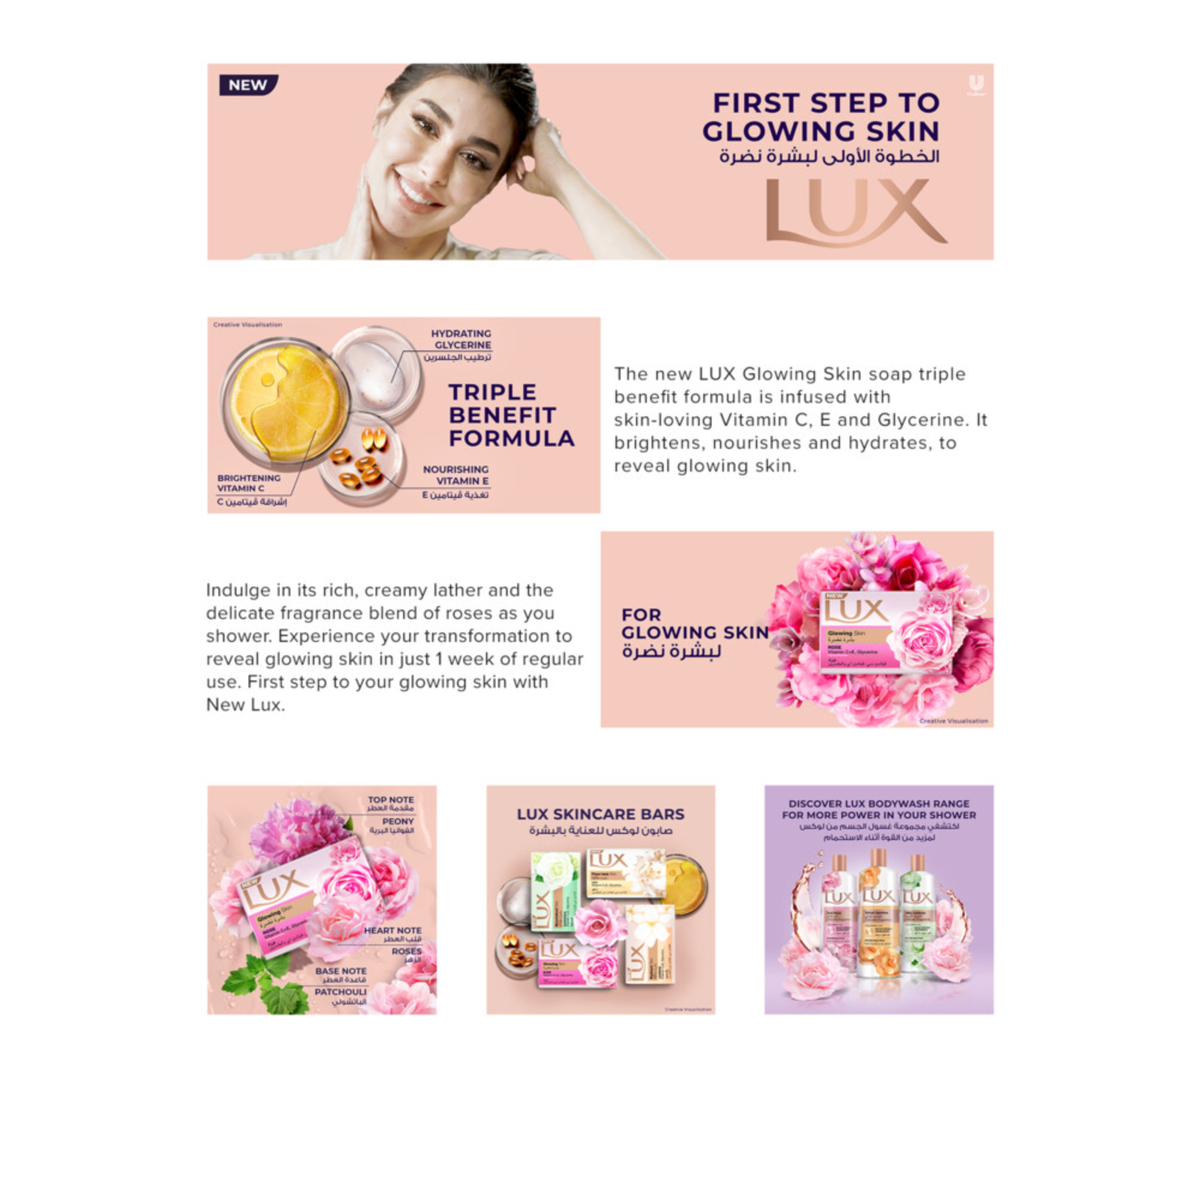 Lux Glowing Skin Rose Bar Soap 170 g